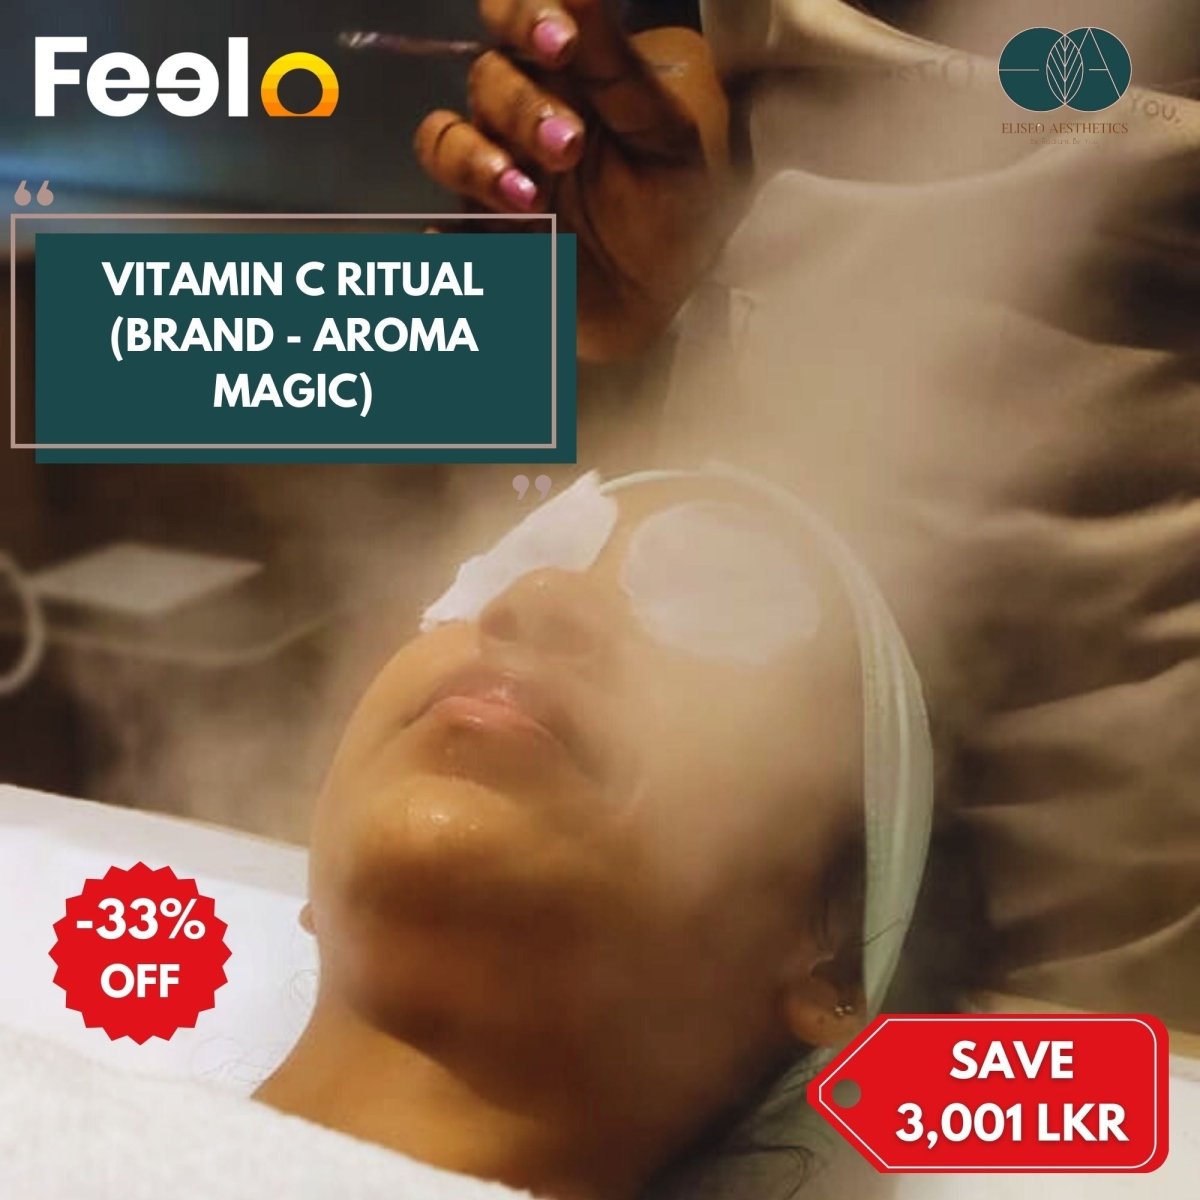 1hr Special Facial Vitamin C Ritual using Aroma Magic - ELISEO AESTHETICS, Colombo 10109 | Feelo